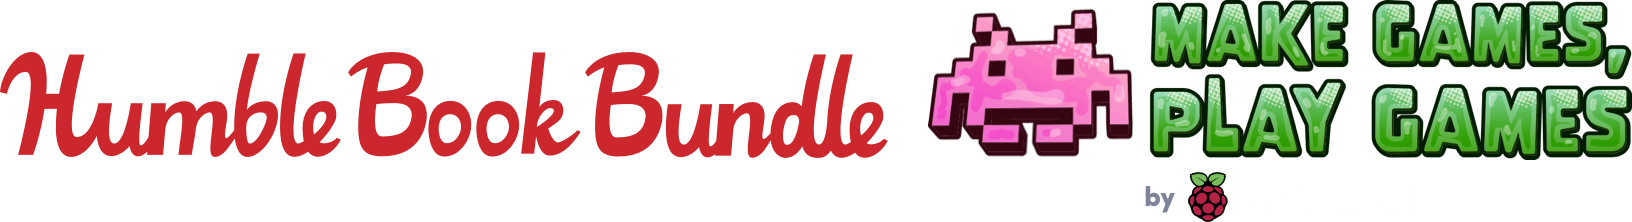 Humble Book Bundle: Raspberry Pi Press Gaming